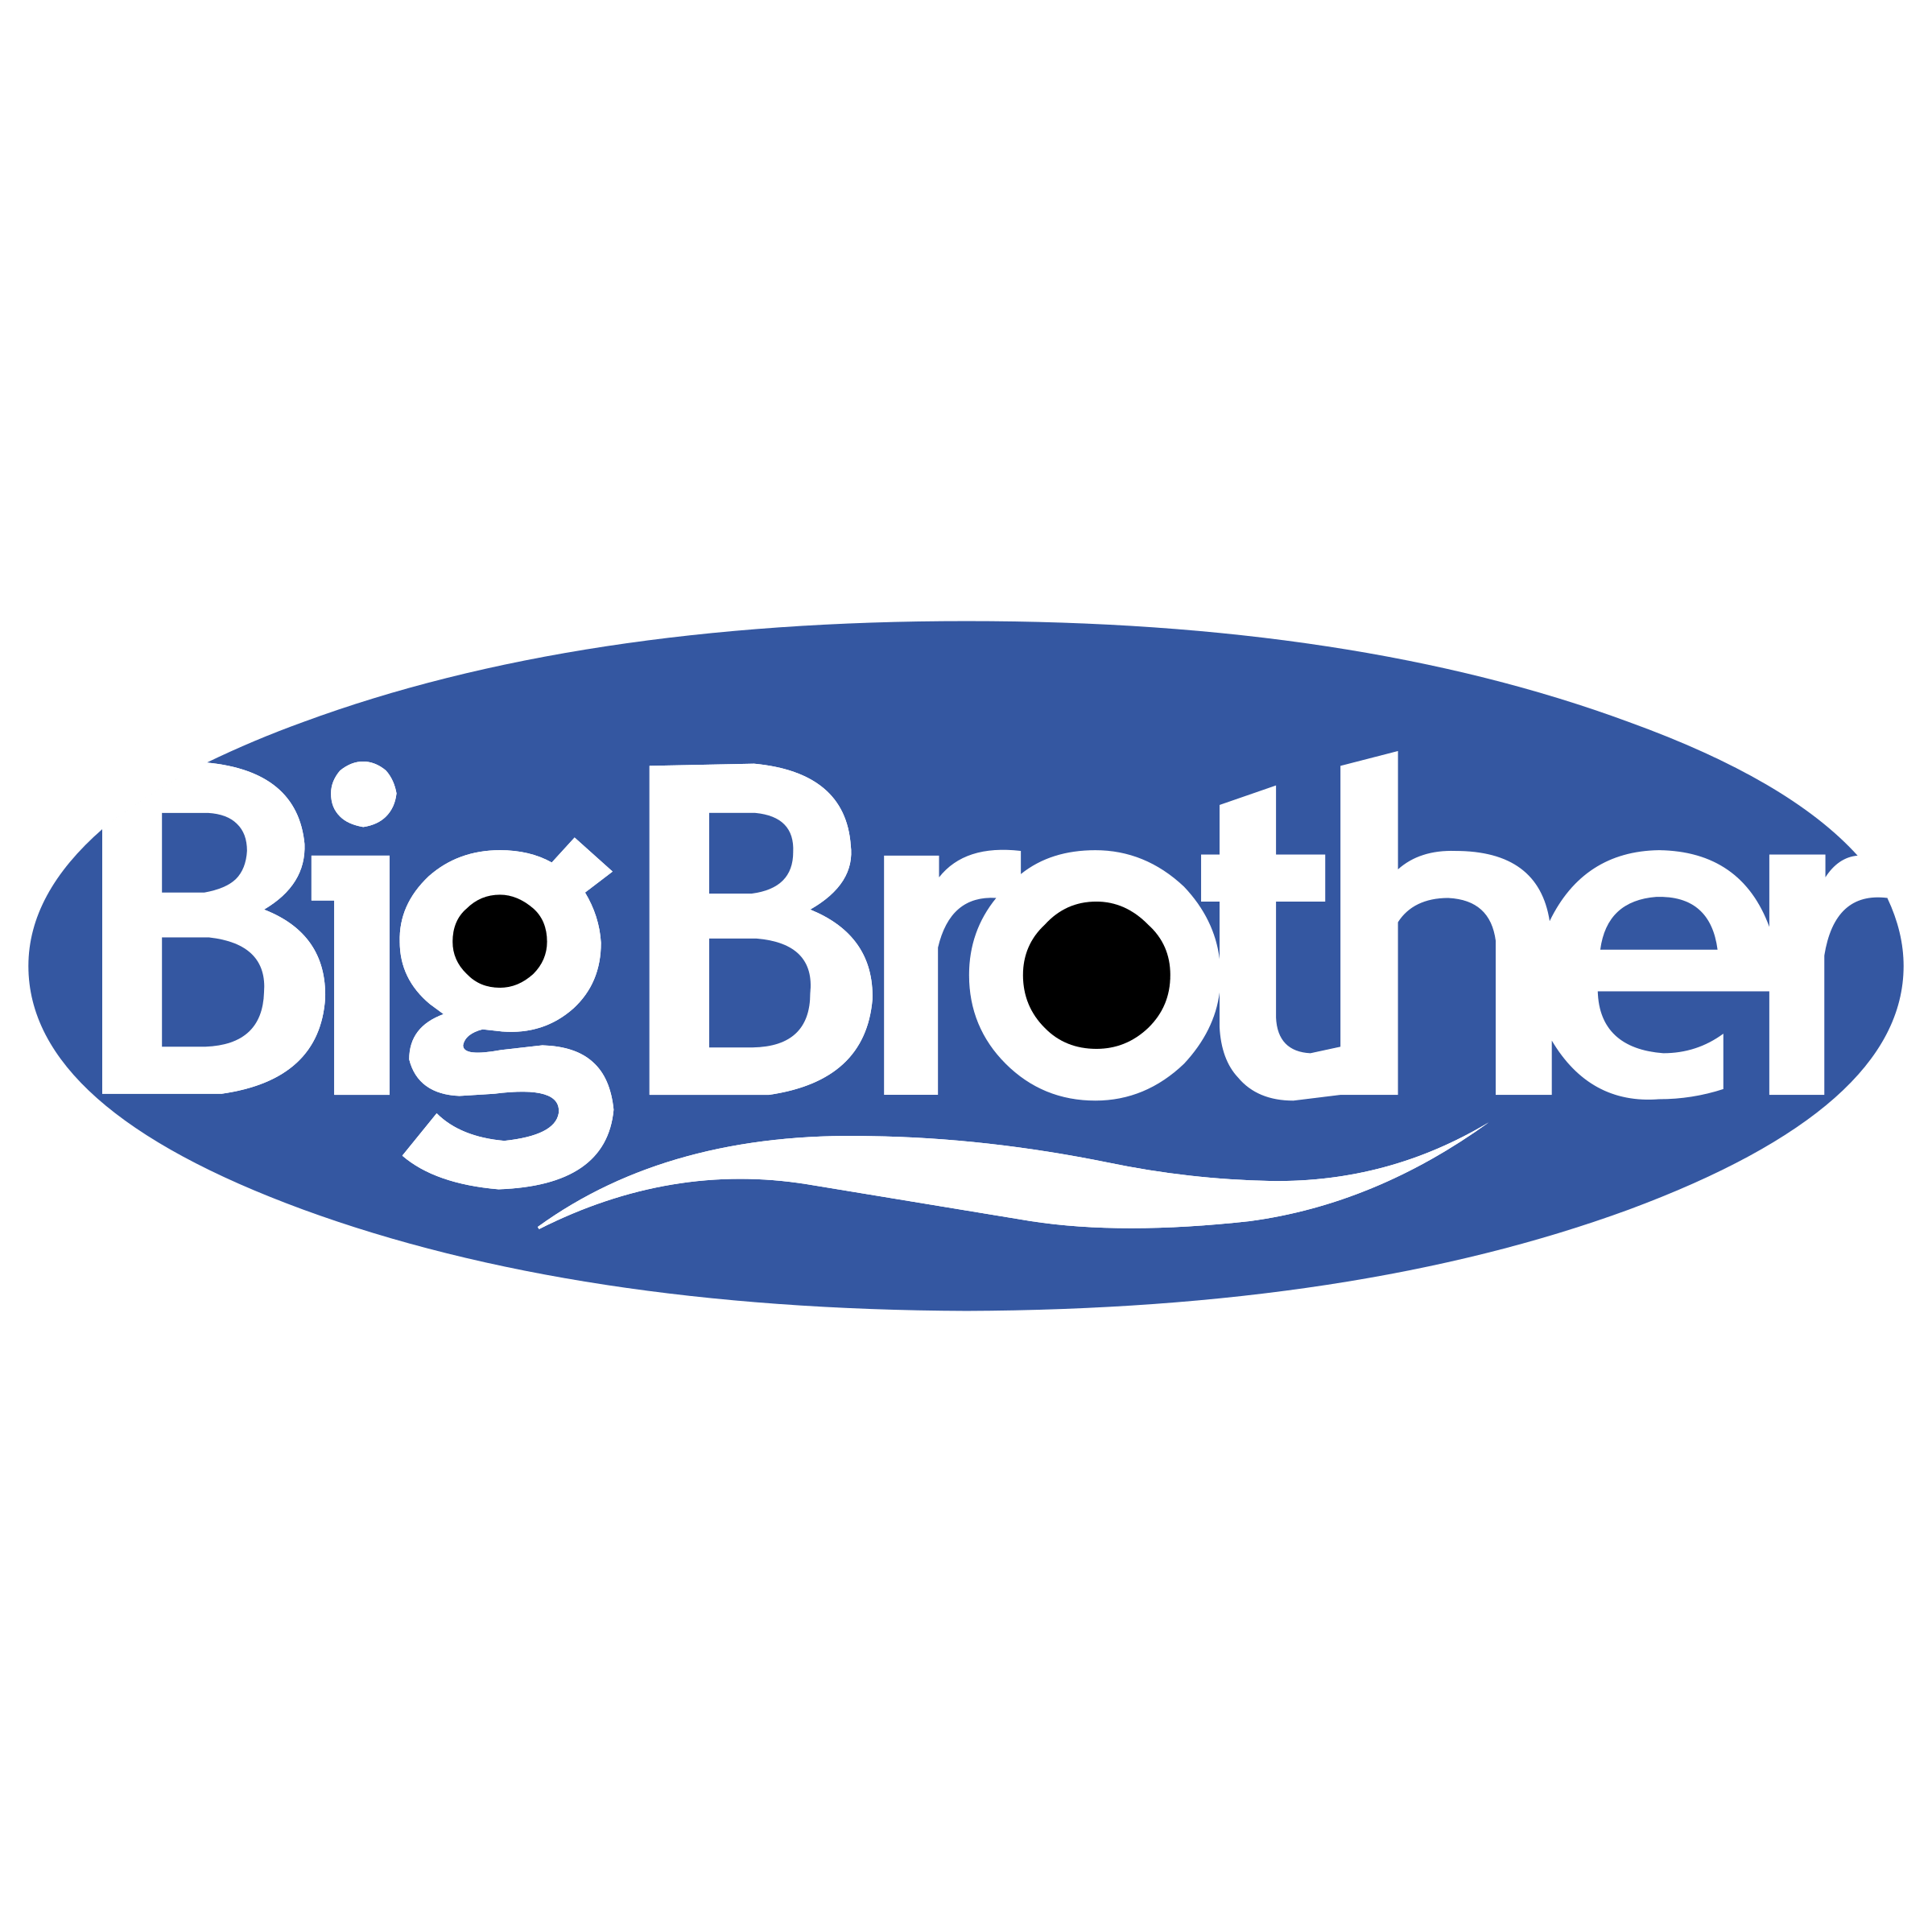 Brother Logo - Big Brother Logo PNG Transparent & SVG Vector - Freebie Supply